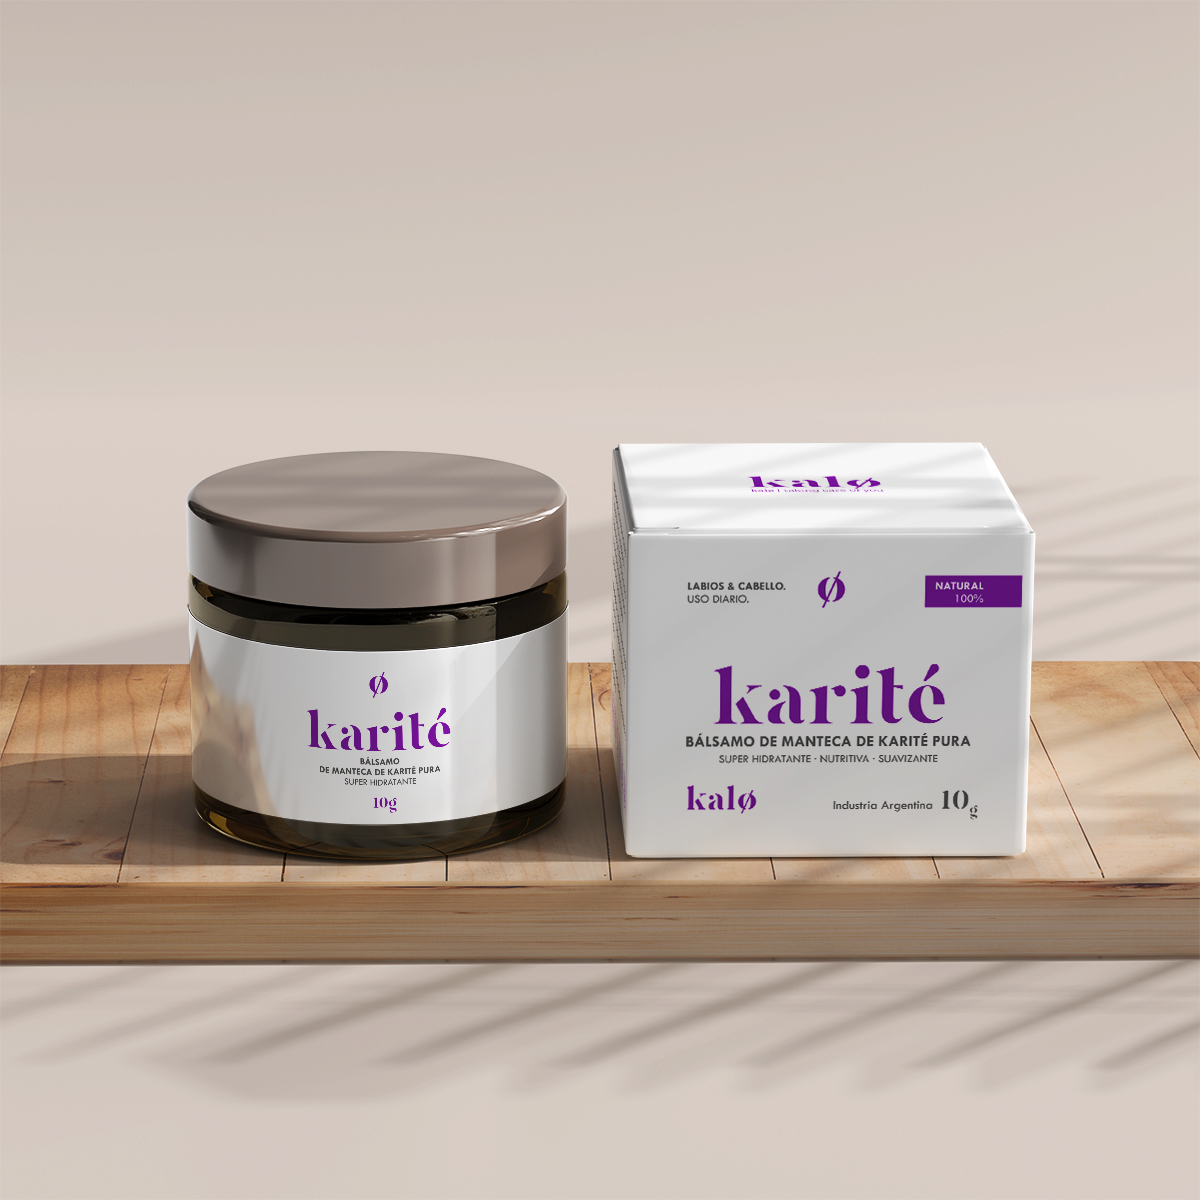 naming branding y packaging de productos - Packaging línea karité Kalo by UMM ideas SA.